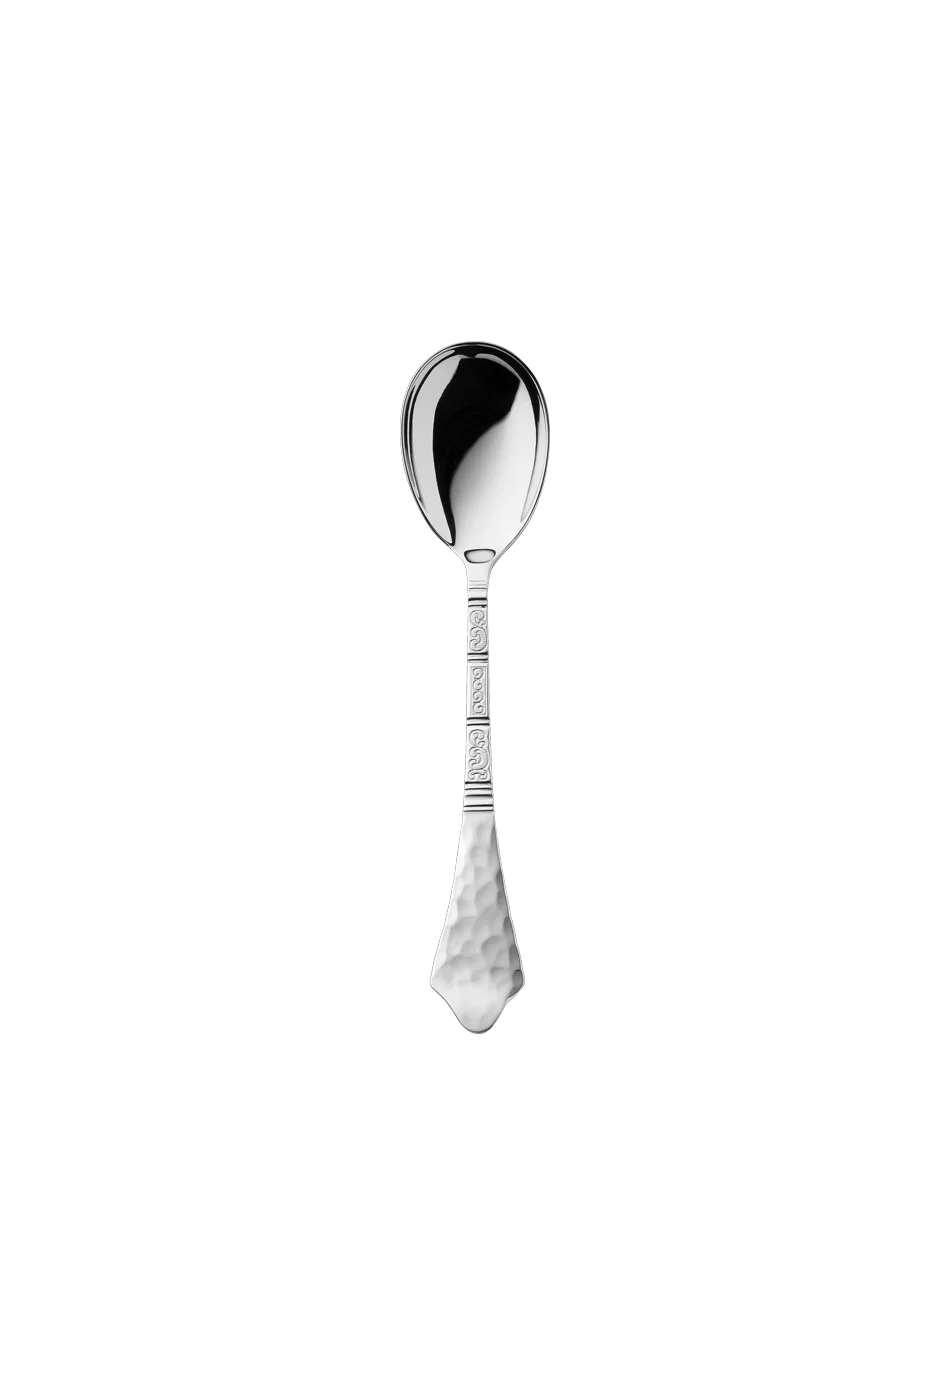 Hermitage Ice-Cream Spoon (150g massive silverplated)